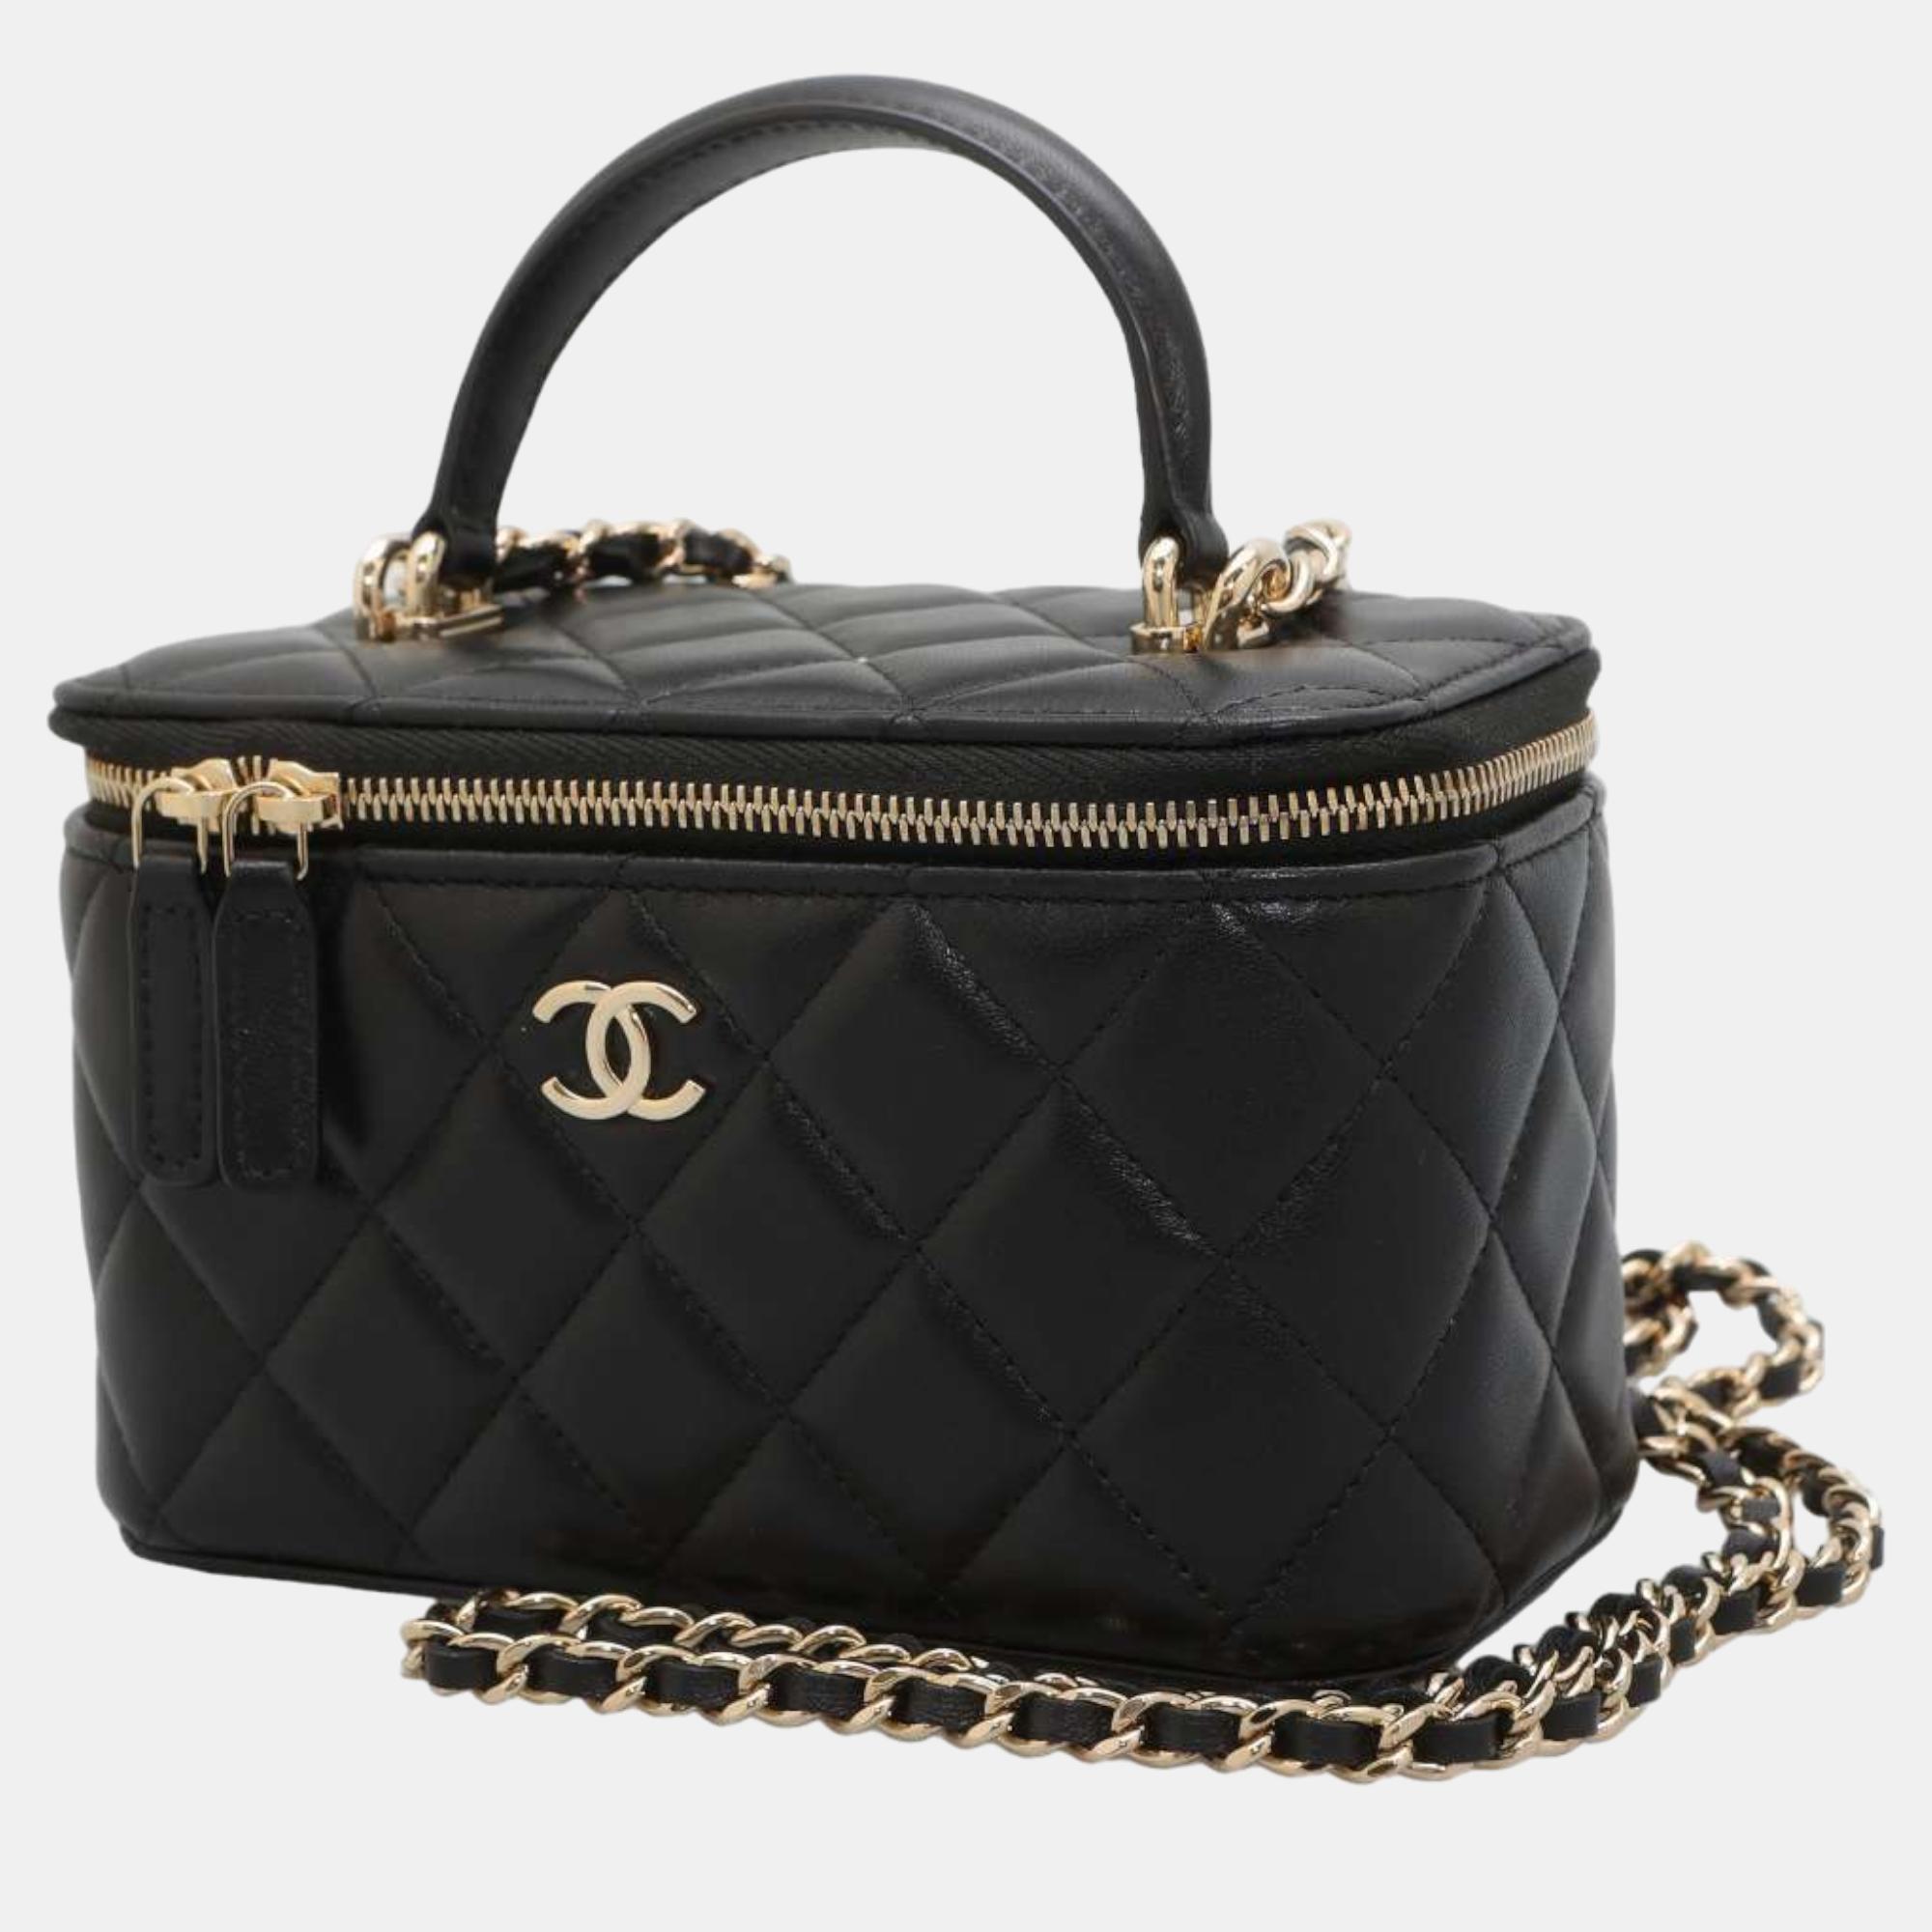 Chanel Black Leather Vanity Case